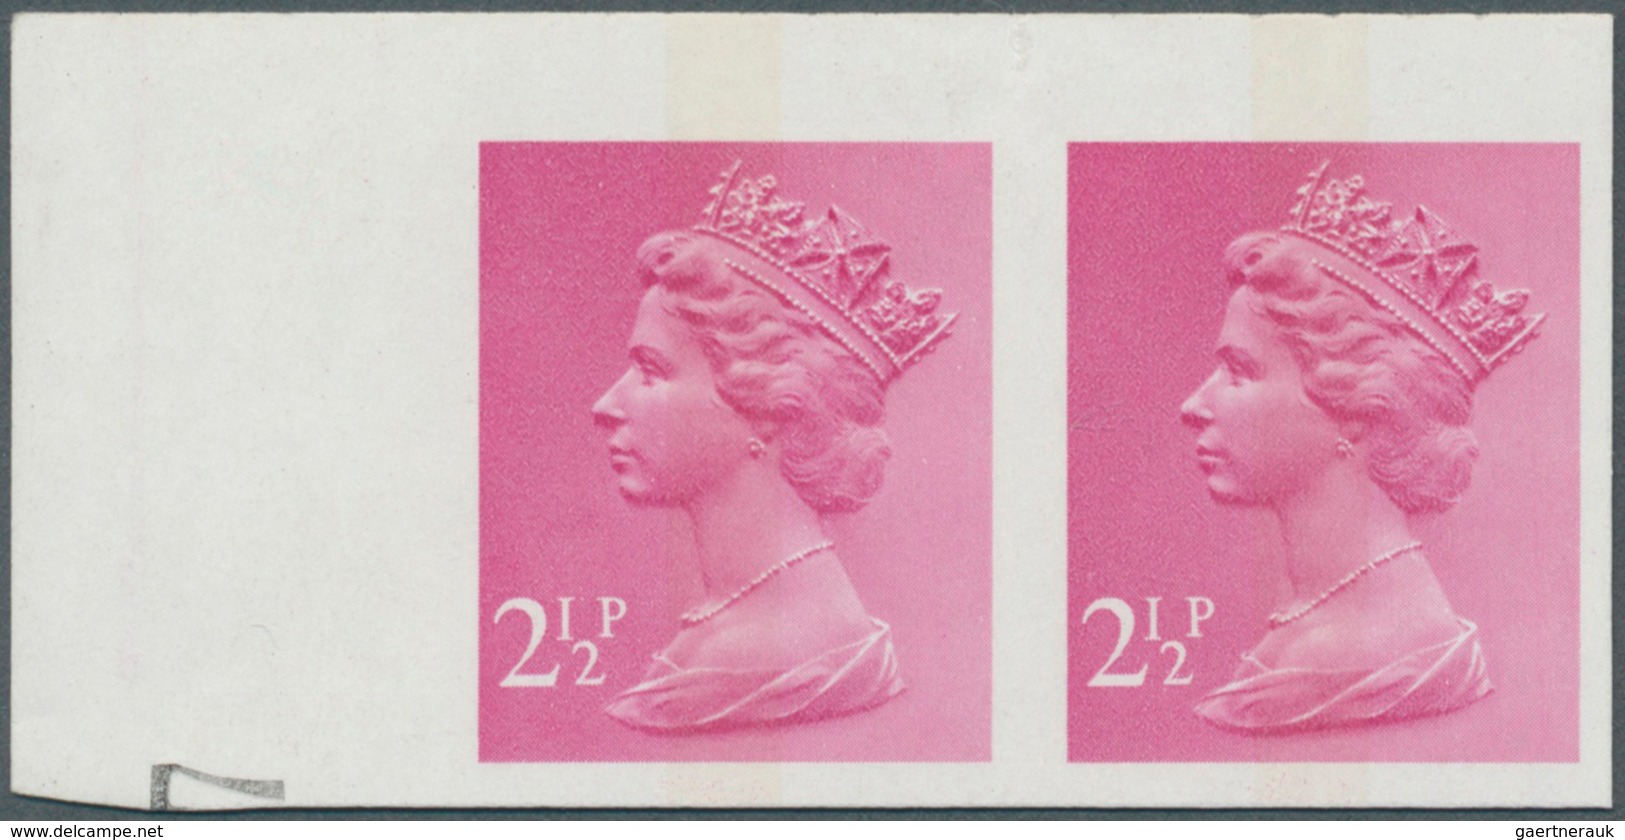 Großbritannien - Machin: 1971, 2 1/2 P. Magenta, Imperforated Horizontal Pair From The Upper Left Co - Série 'Machin'